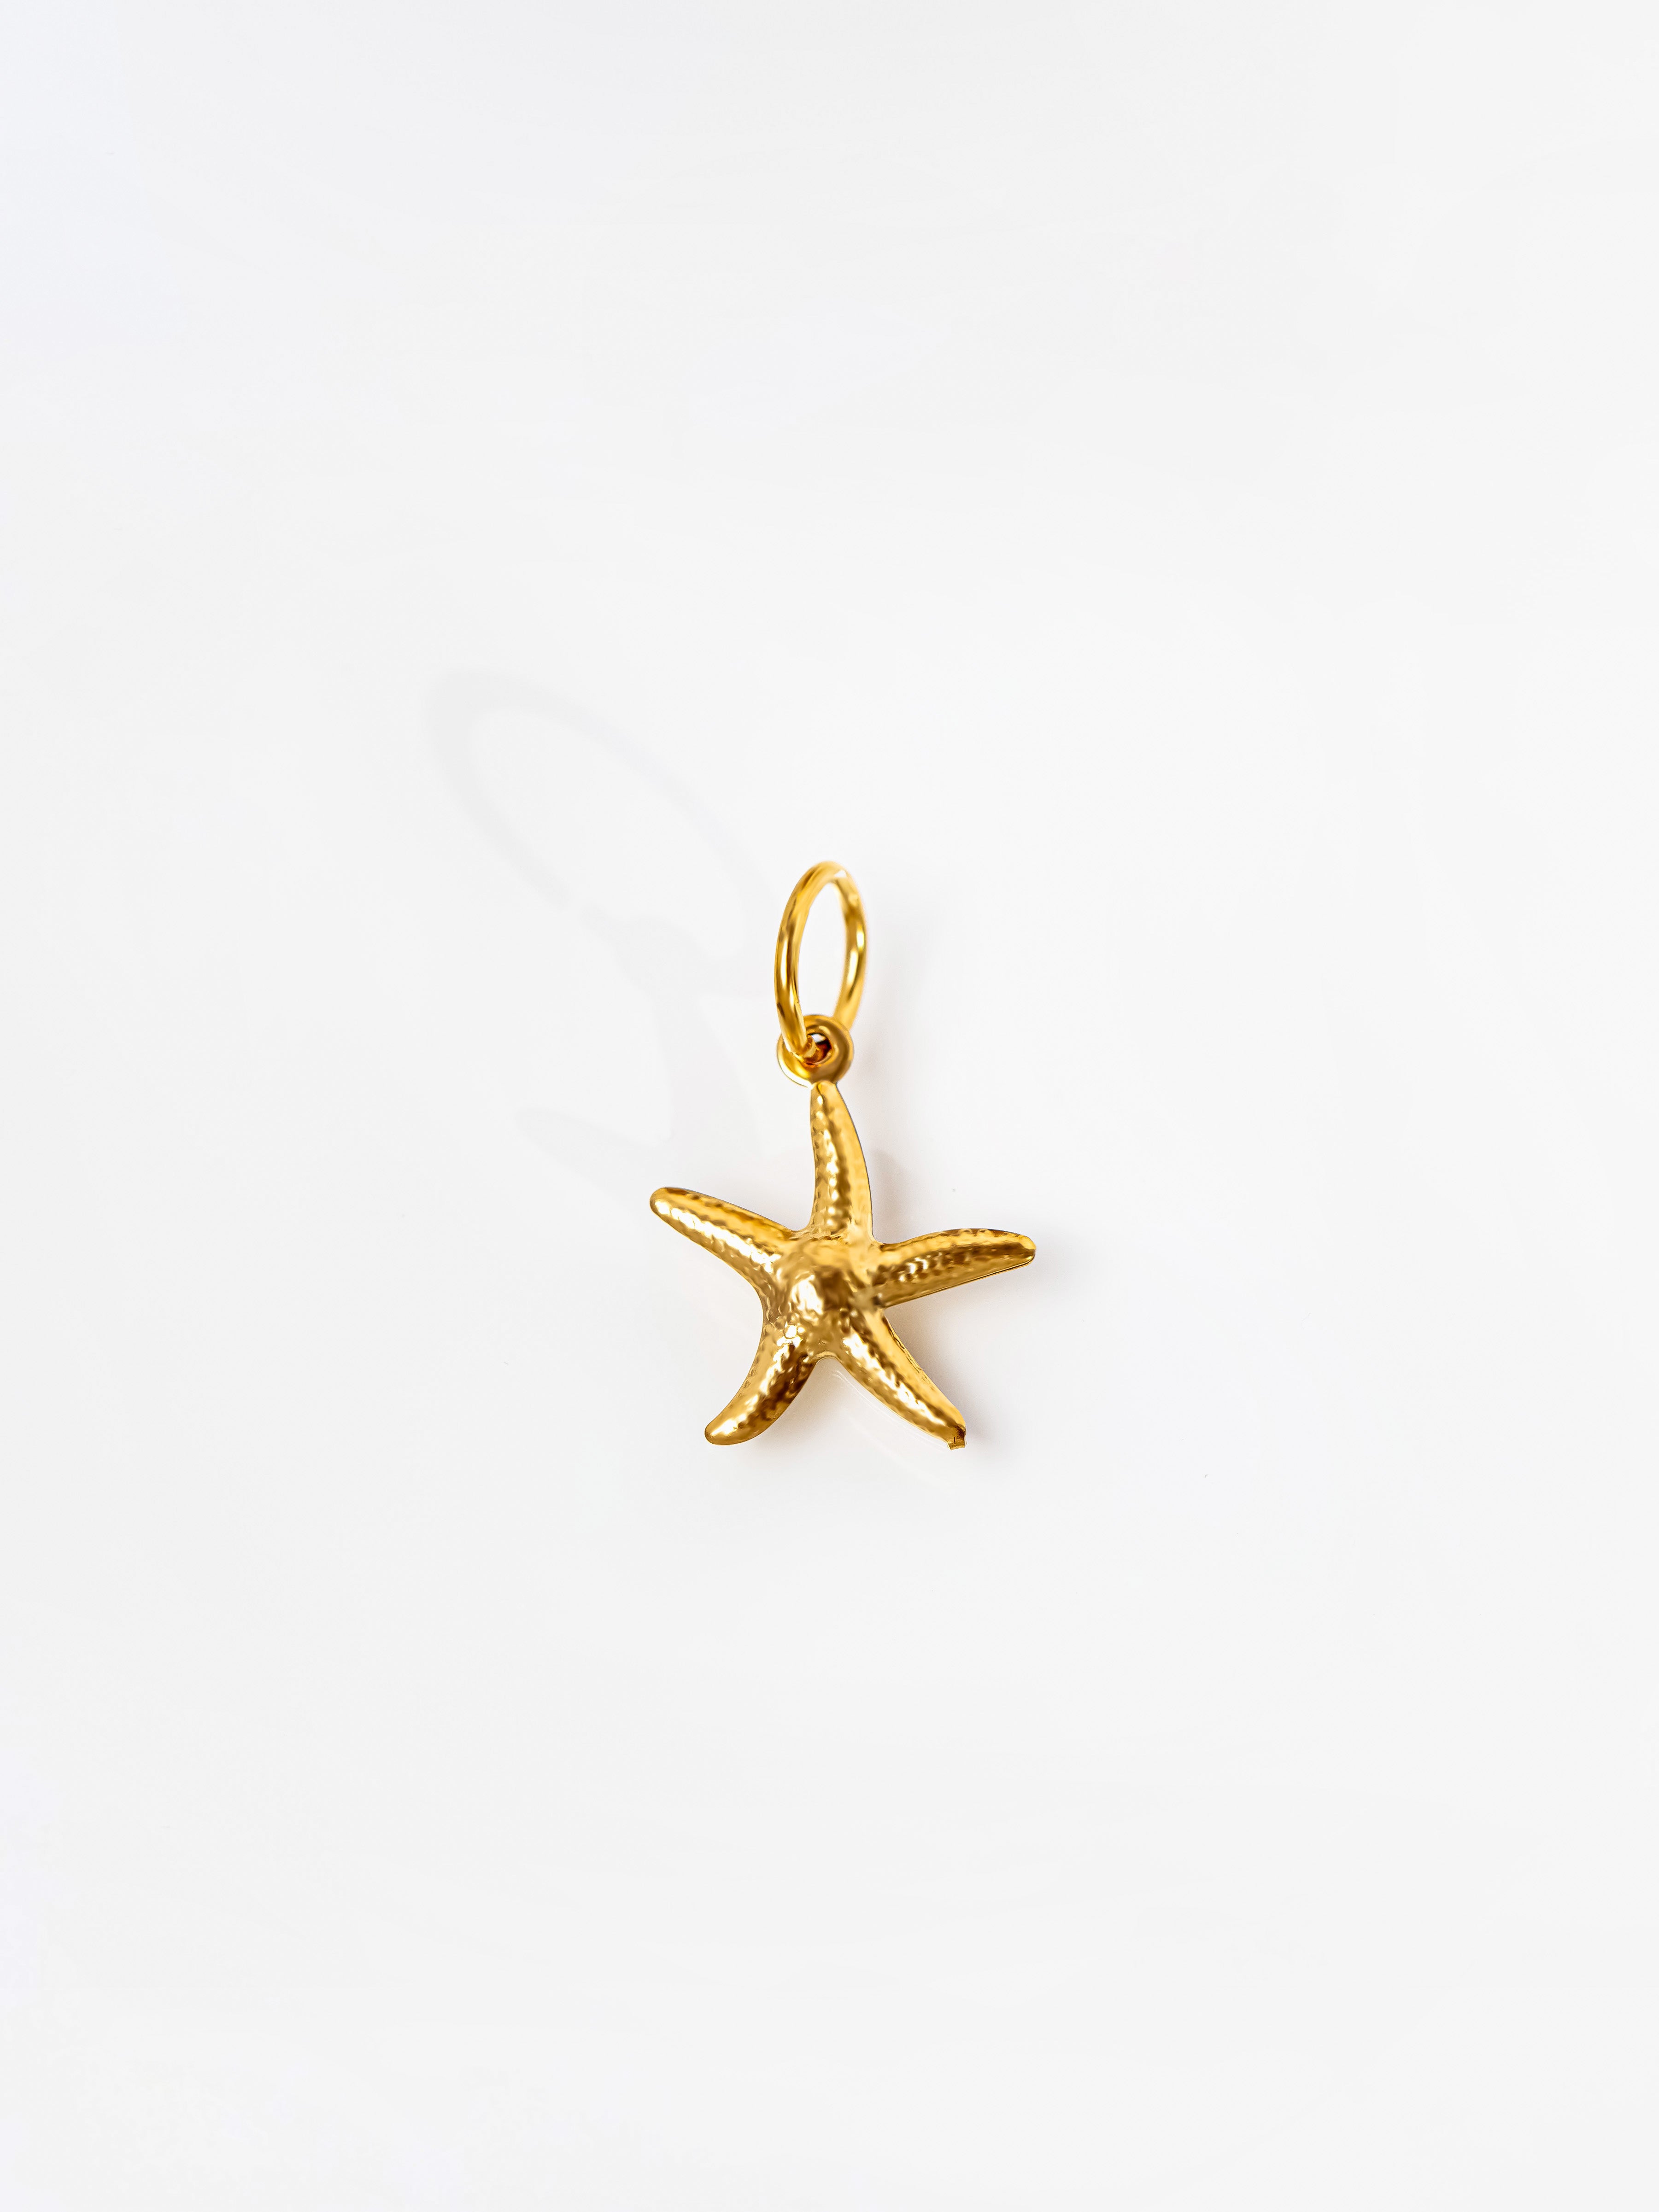 Gold Tiny Star Fish Pendant / Charm